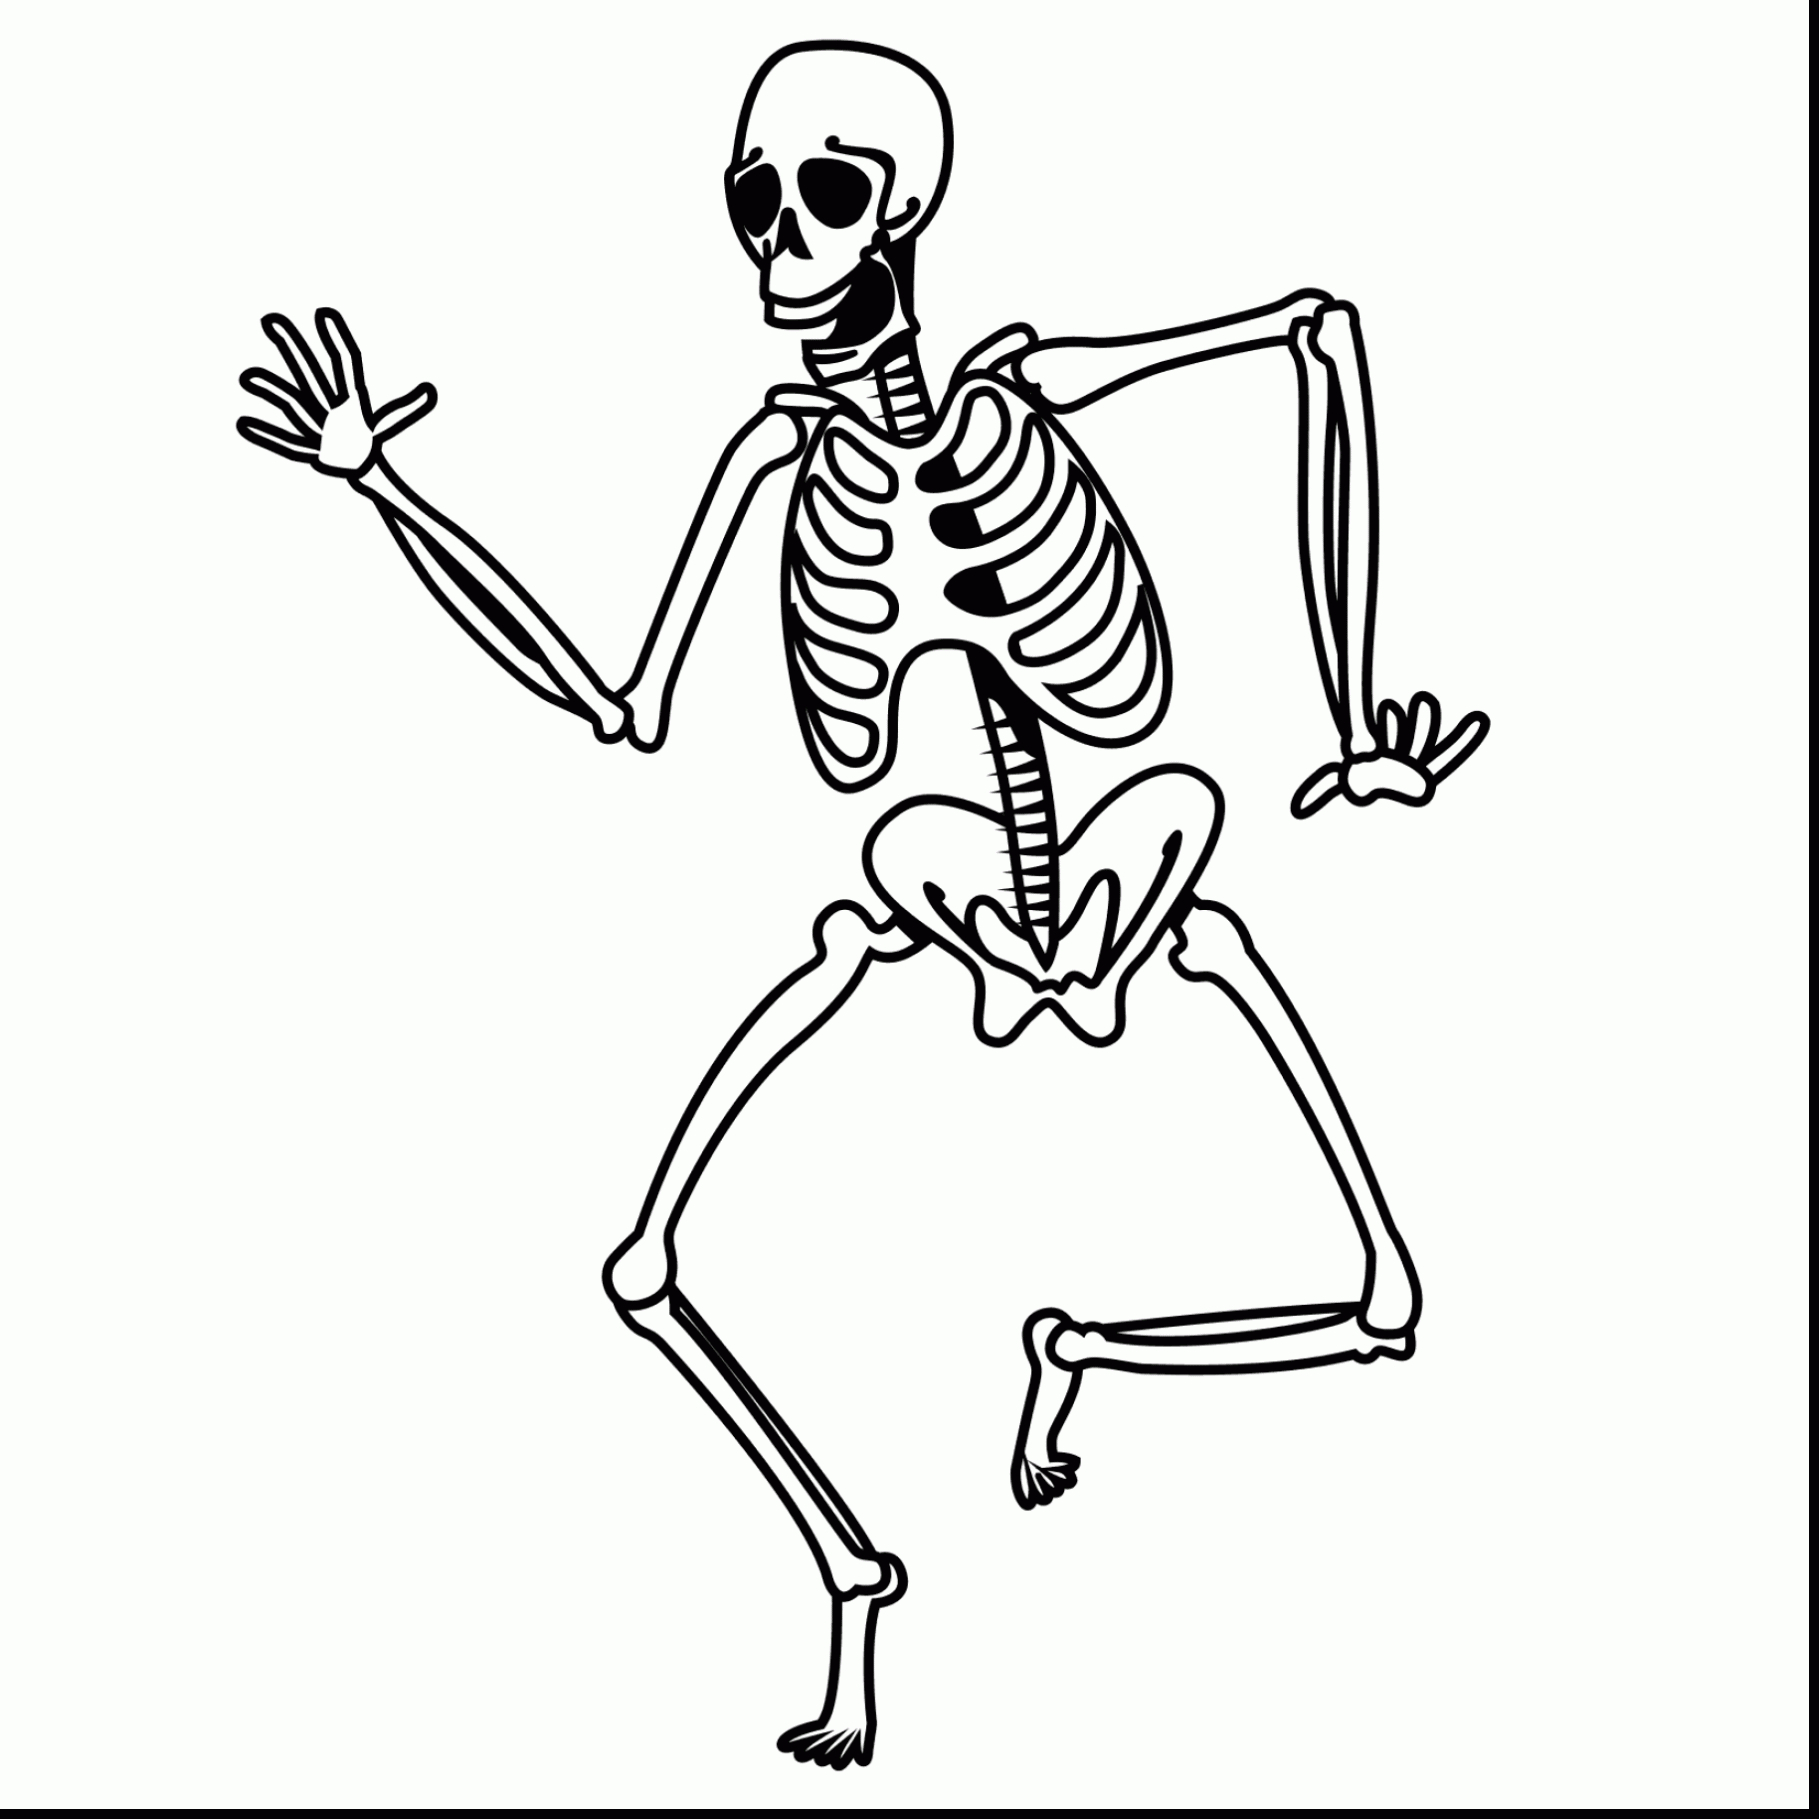 Human Skeleton Coloring Pages Skeleton Coloring Page Pathtalk